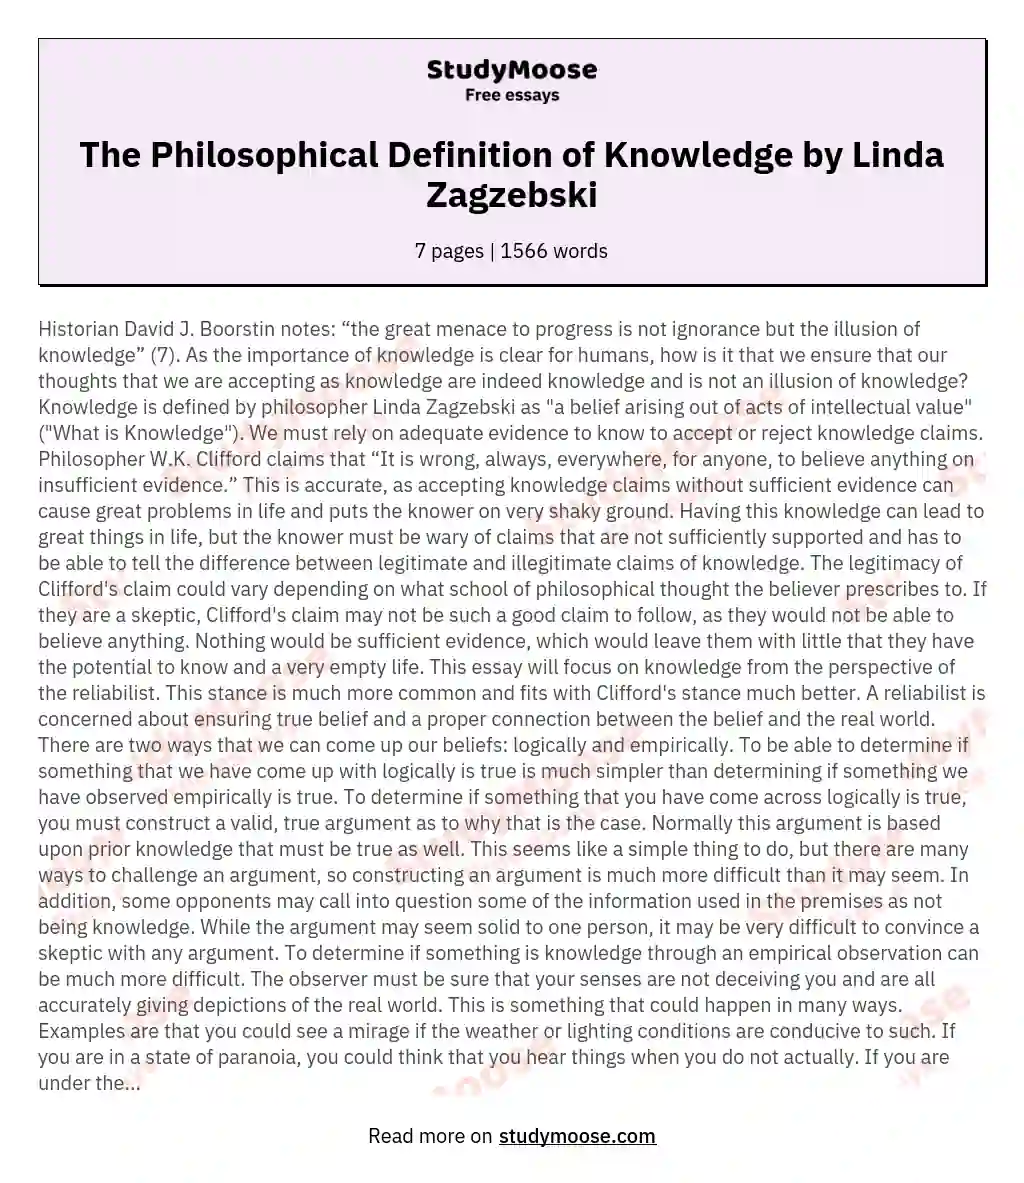 The Philosophical Definition of Knowledge by Linda Zagzebski essay